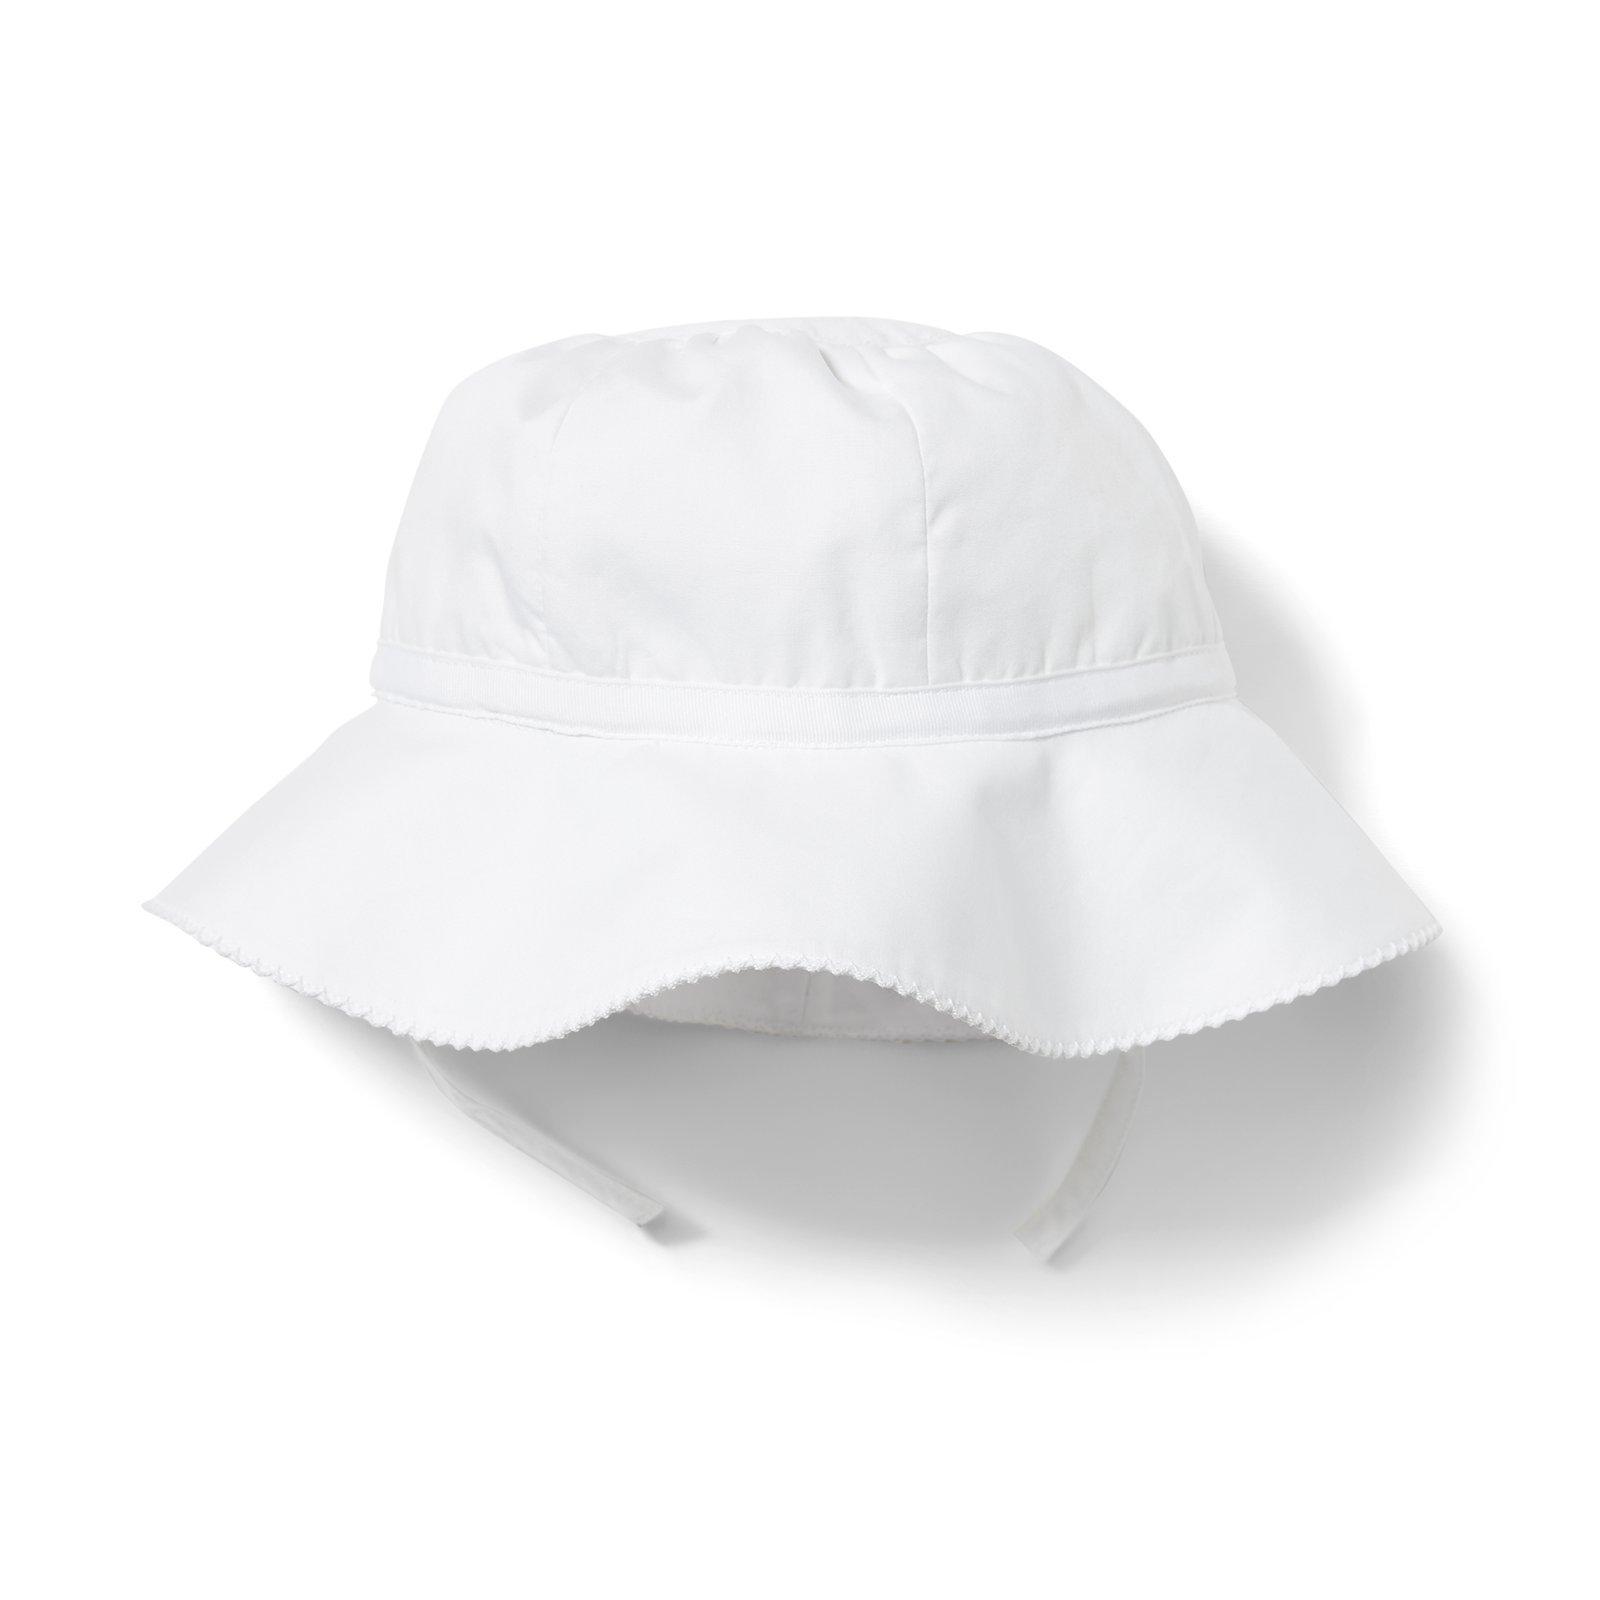 Marni Kids Sunny Day cotton bucket hat - White